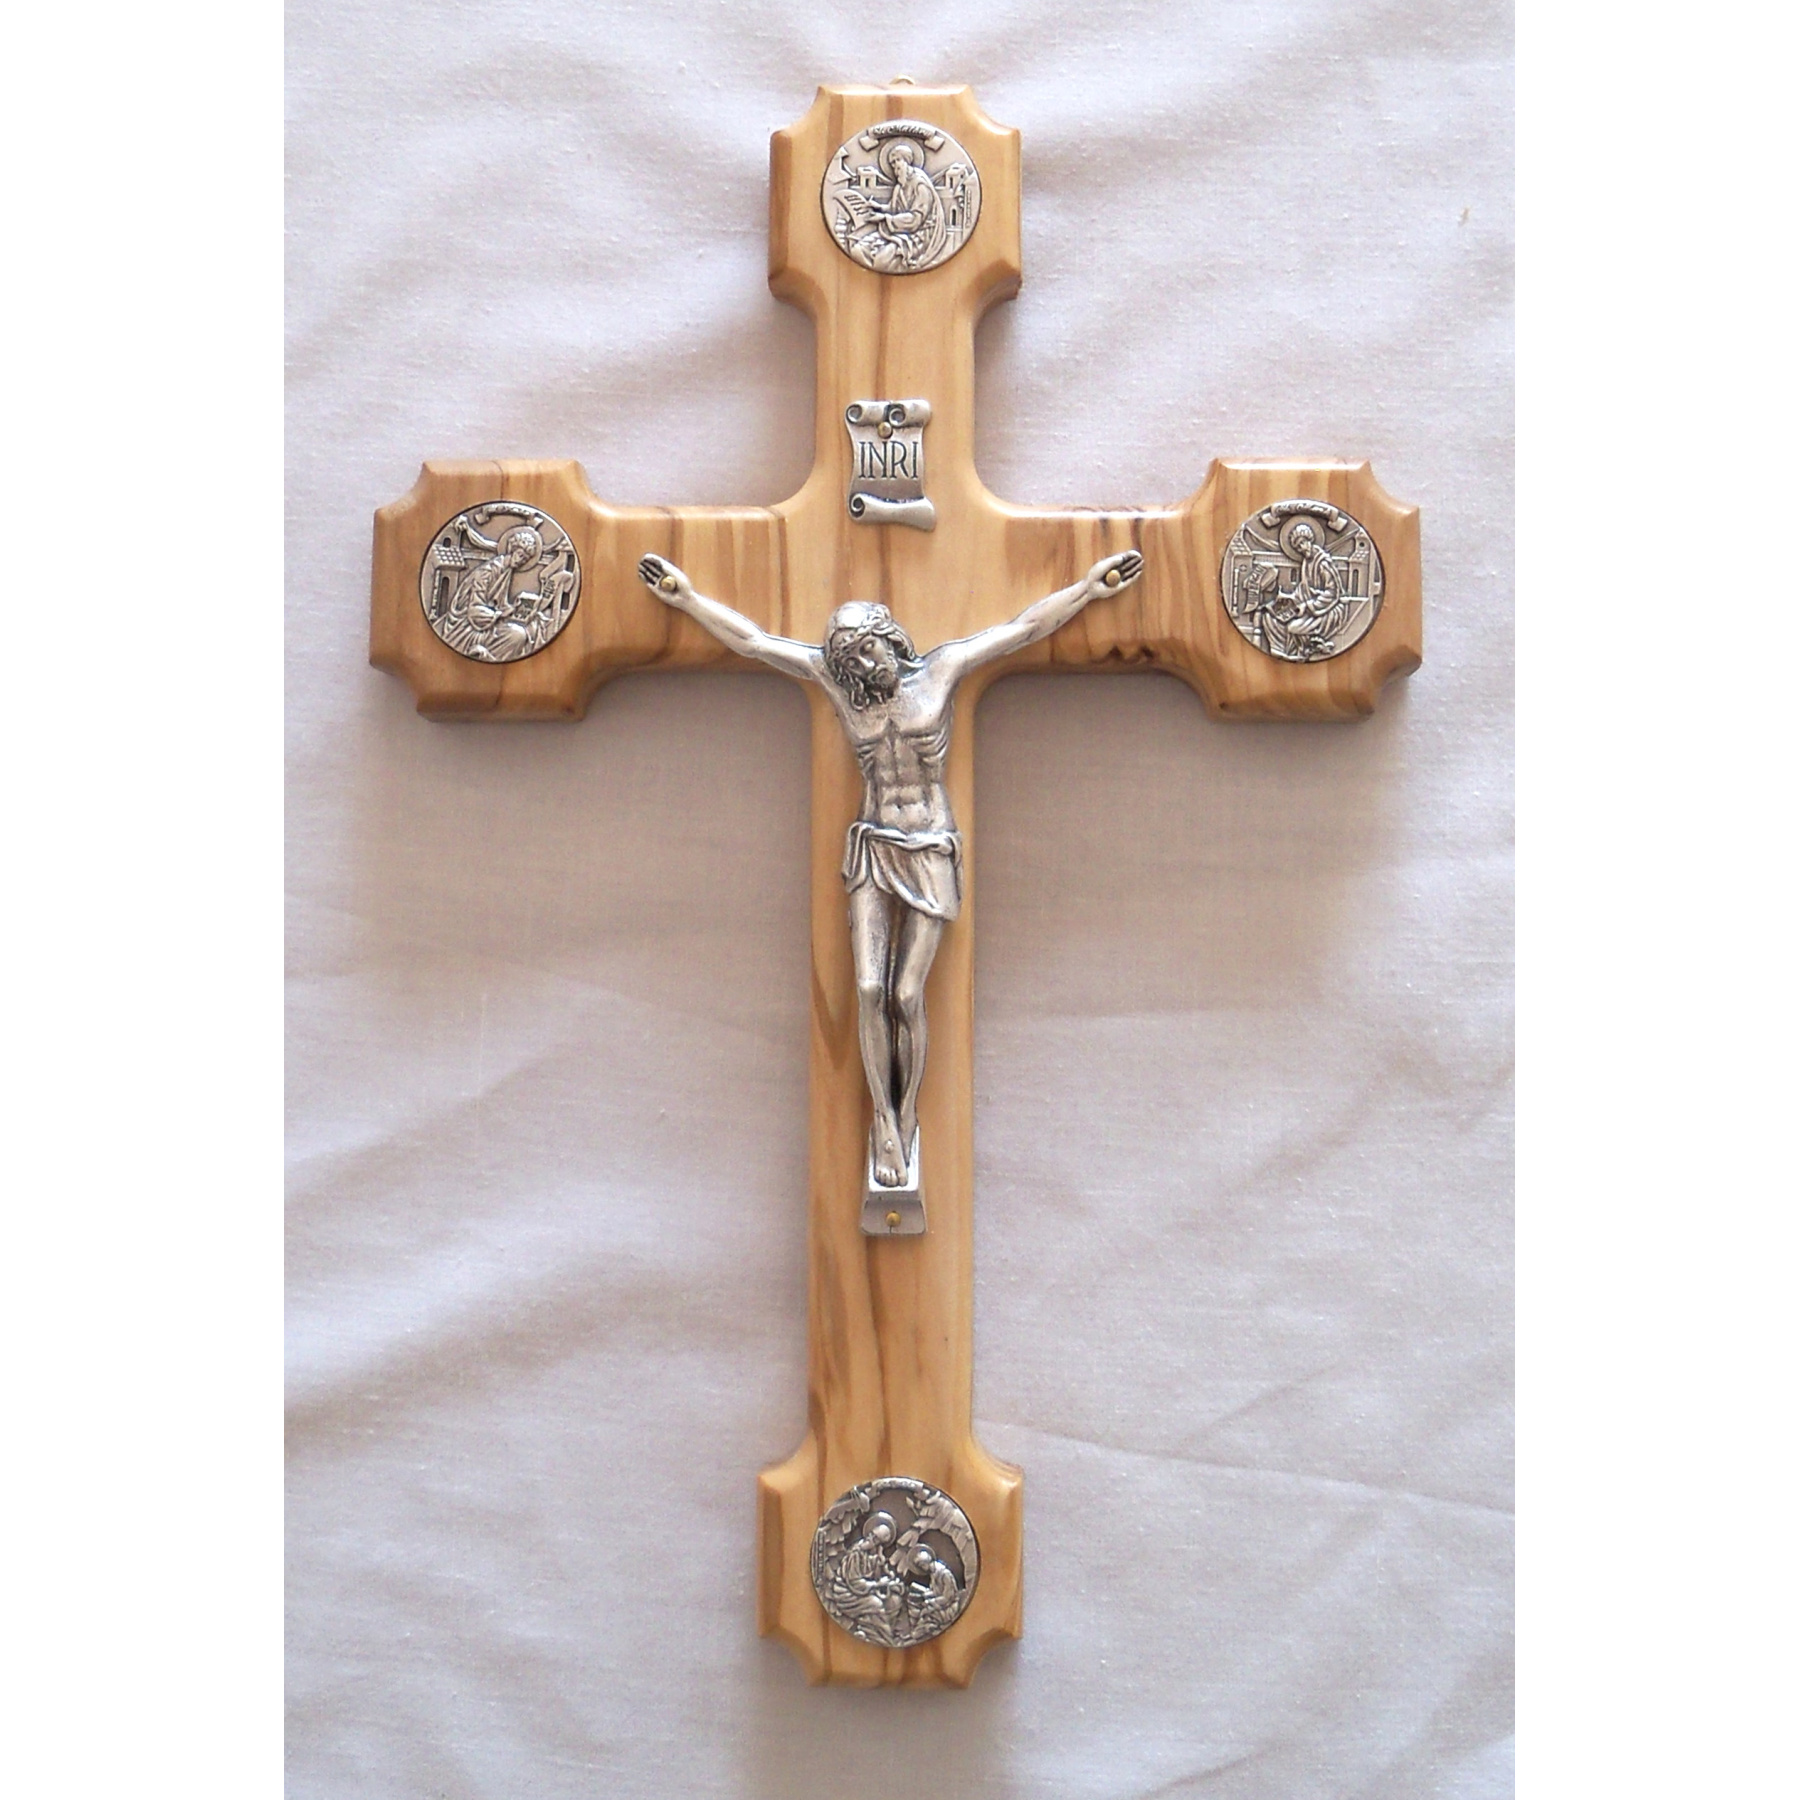 Four Evangelists crucifix